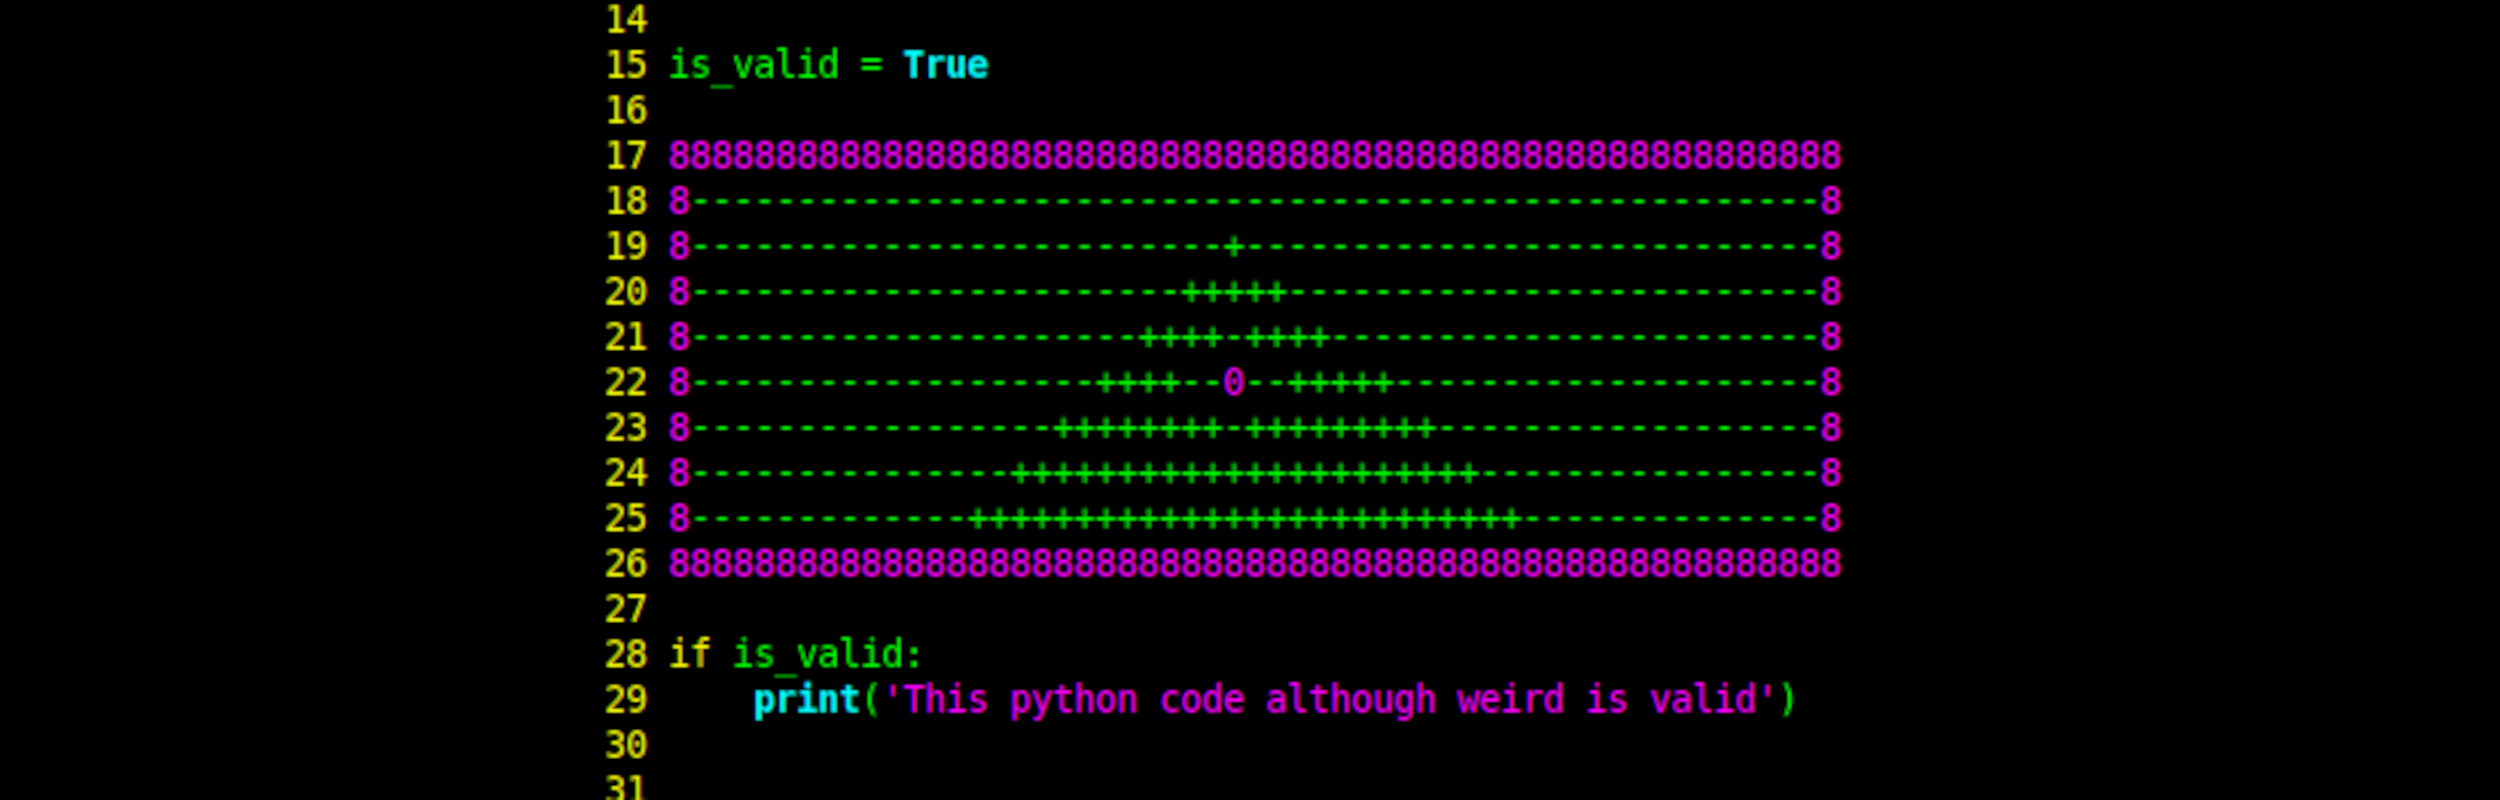 An example of Python’s weird arithmetic